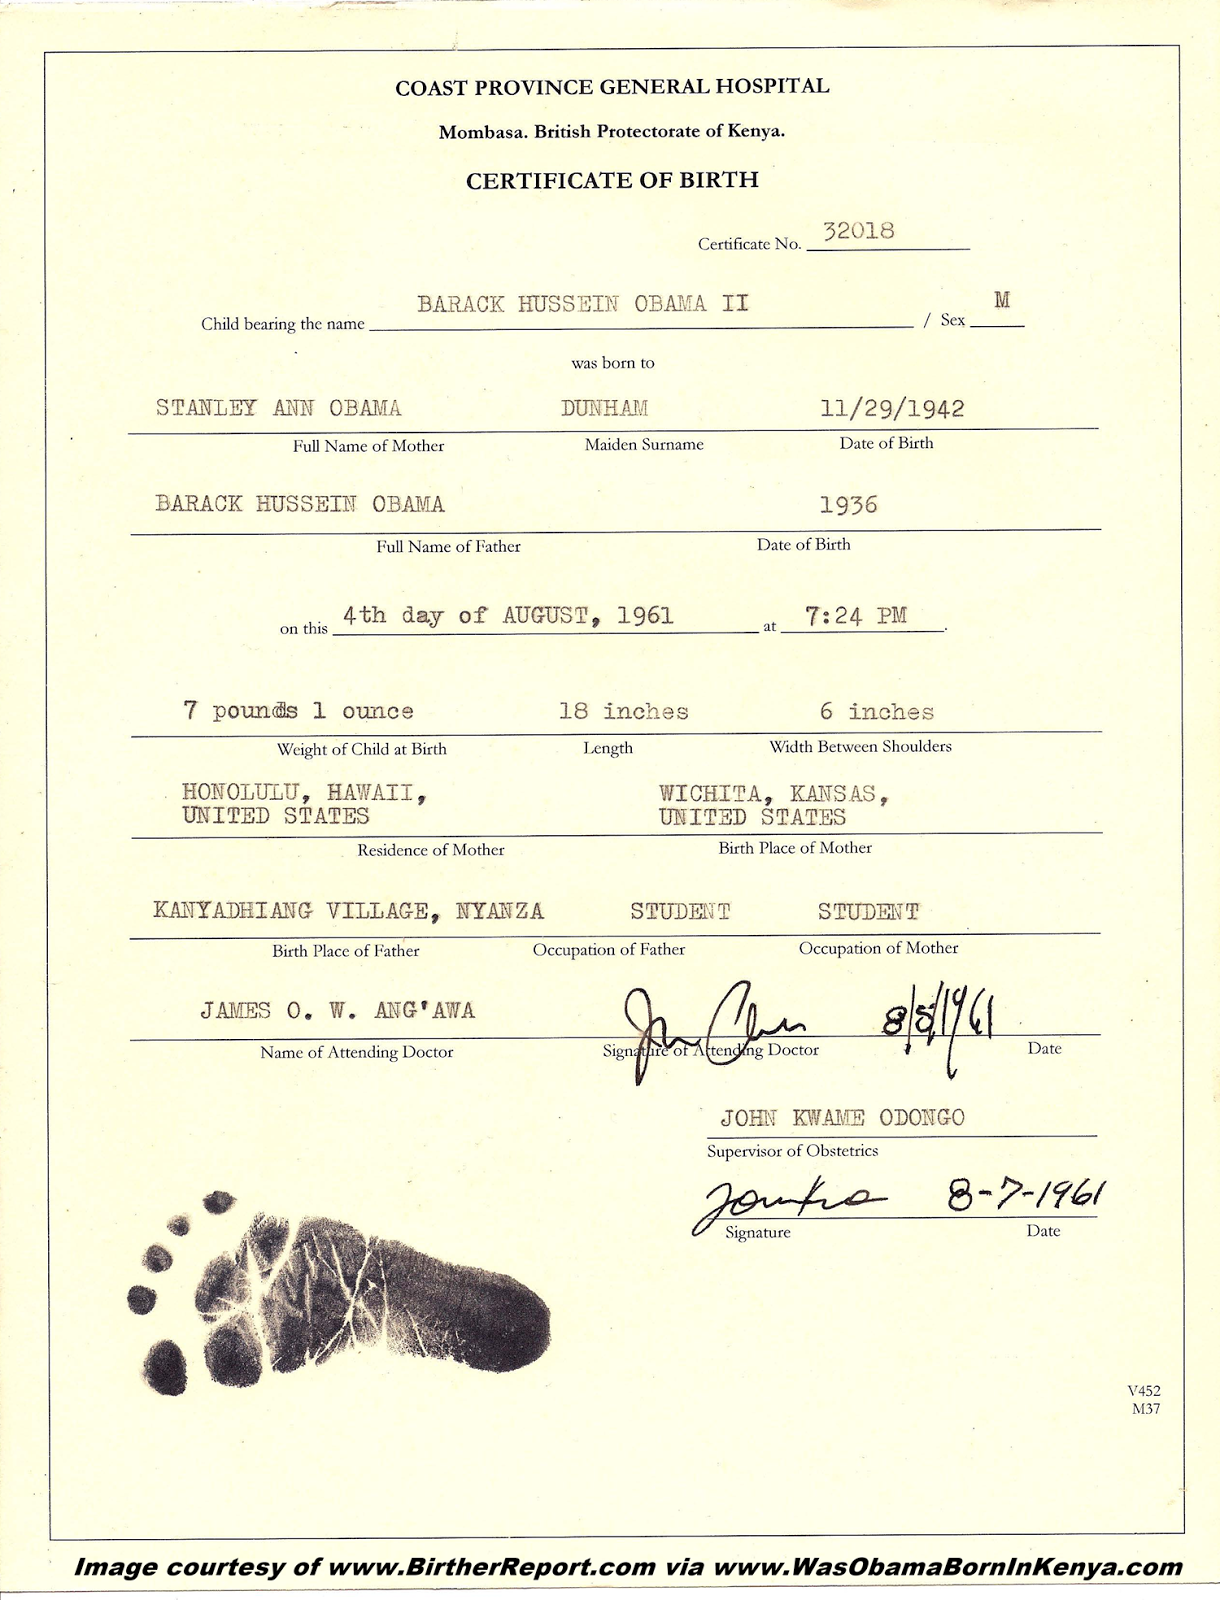 Barack-Obama-birth-certificate-Coast-Province-General-Hospital-Mombasa-Kenya-1961-1500.png